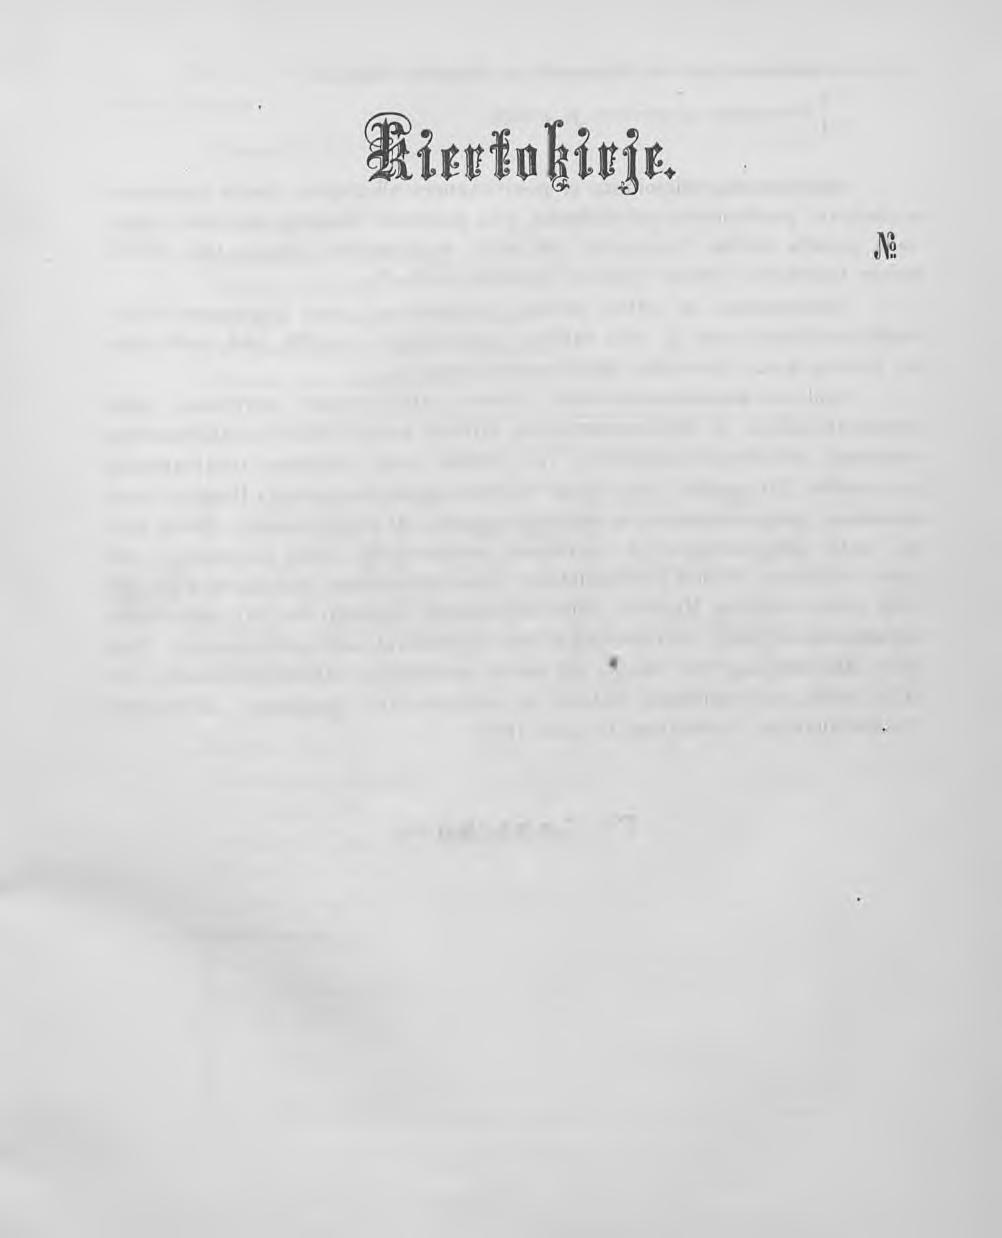 1896. S uom en P o stih a llitu k se sta. 11. Q. Sähkösanomapostiosoitusten asettamisesta.